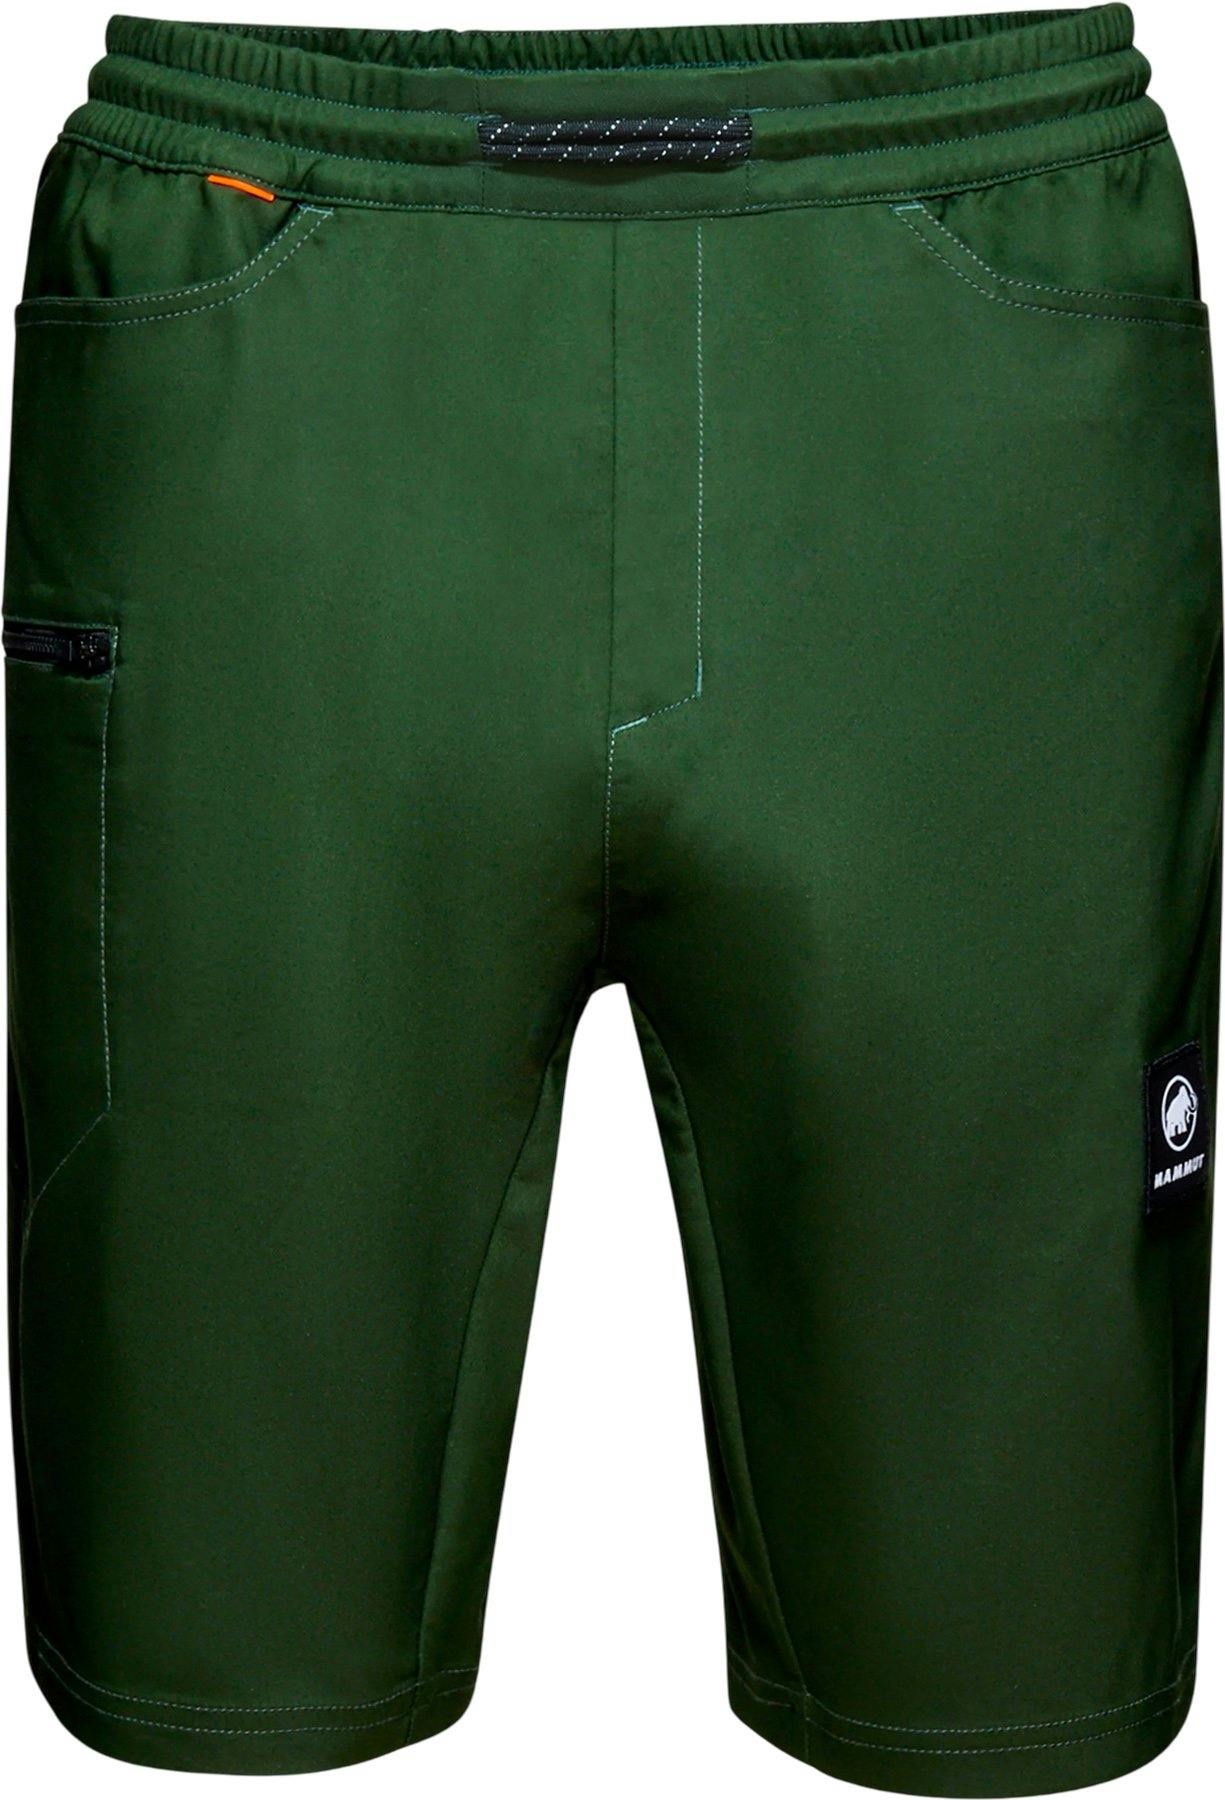 Product image for Massone Shorts - Men's